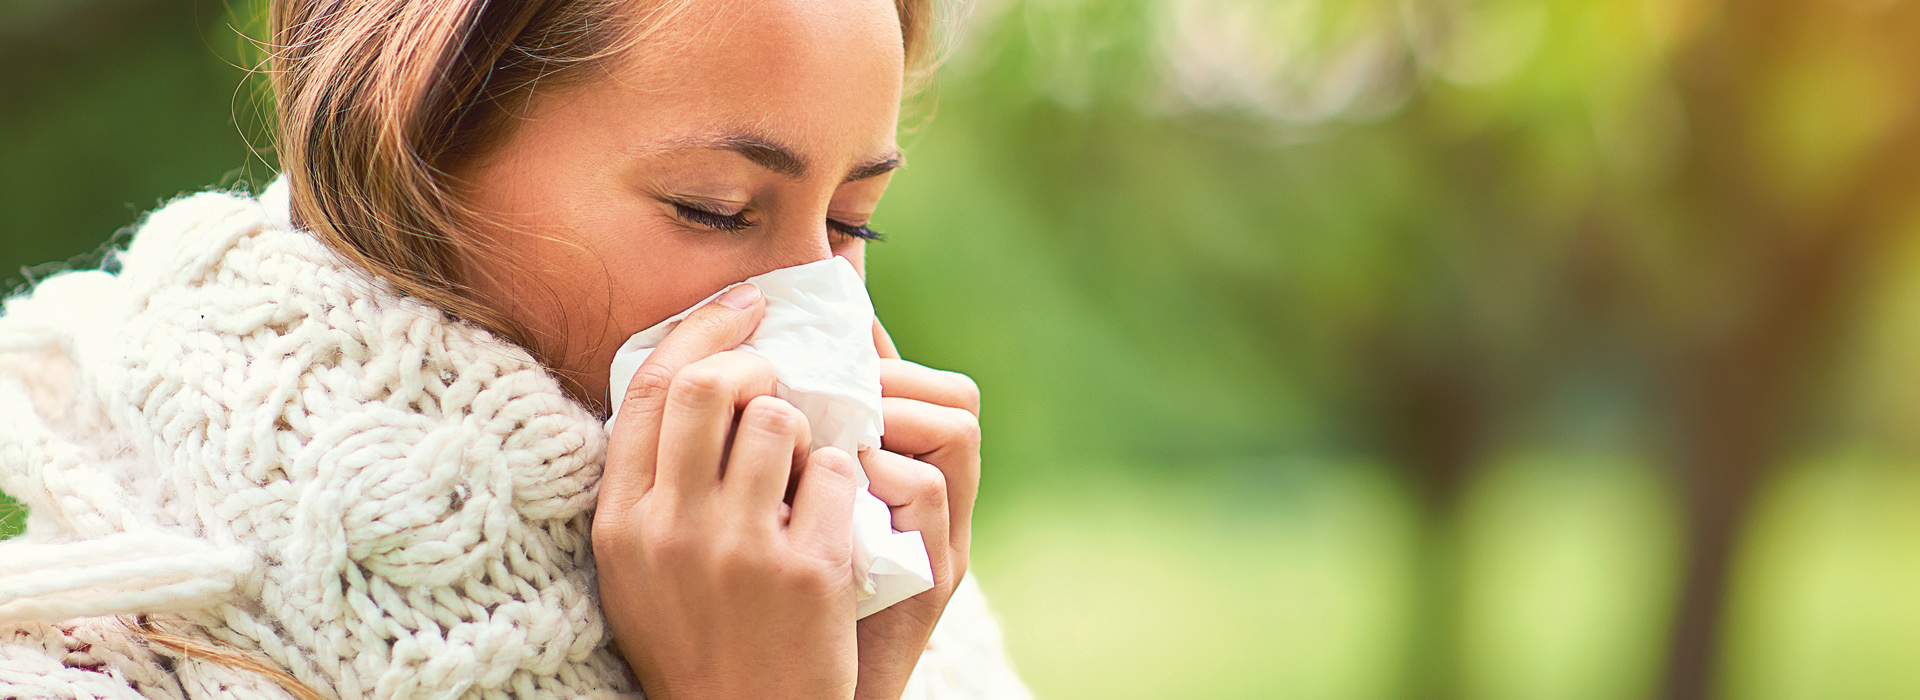 Allergie, Pollen, Frau, Heuschnupfen, Erkältung, Pollensaison, Niesen, Kopfschmerzen, Beschwerden